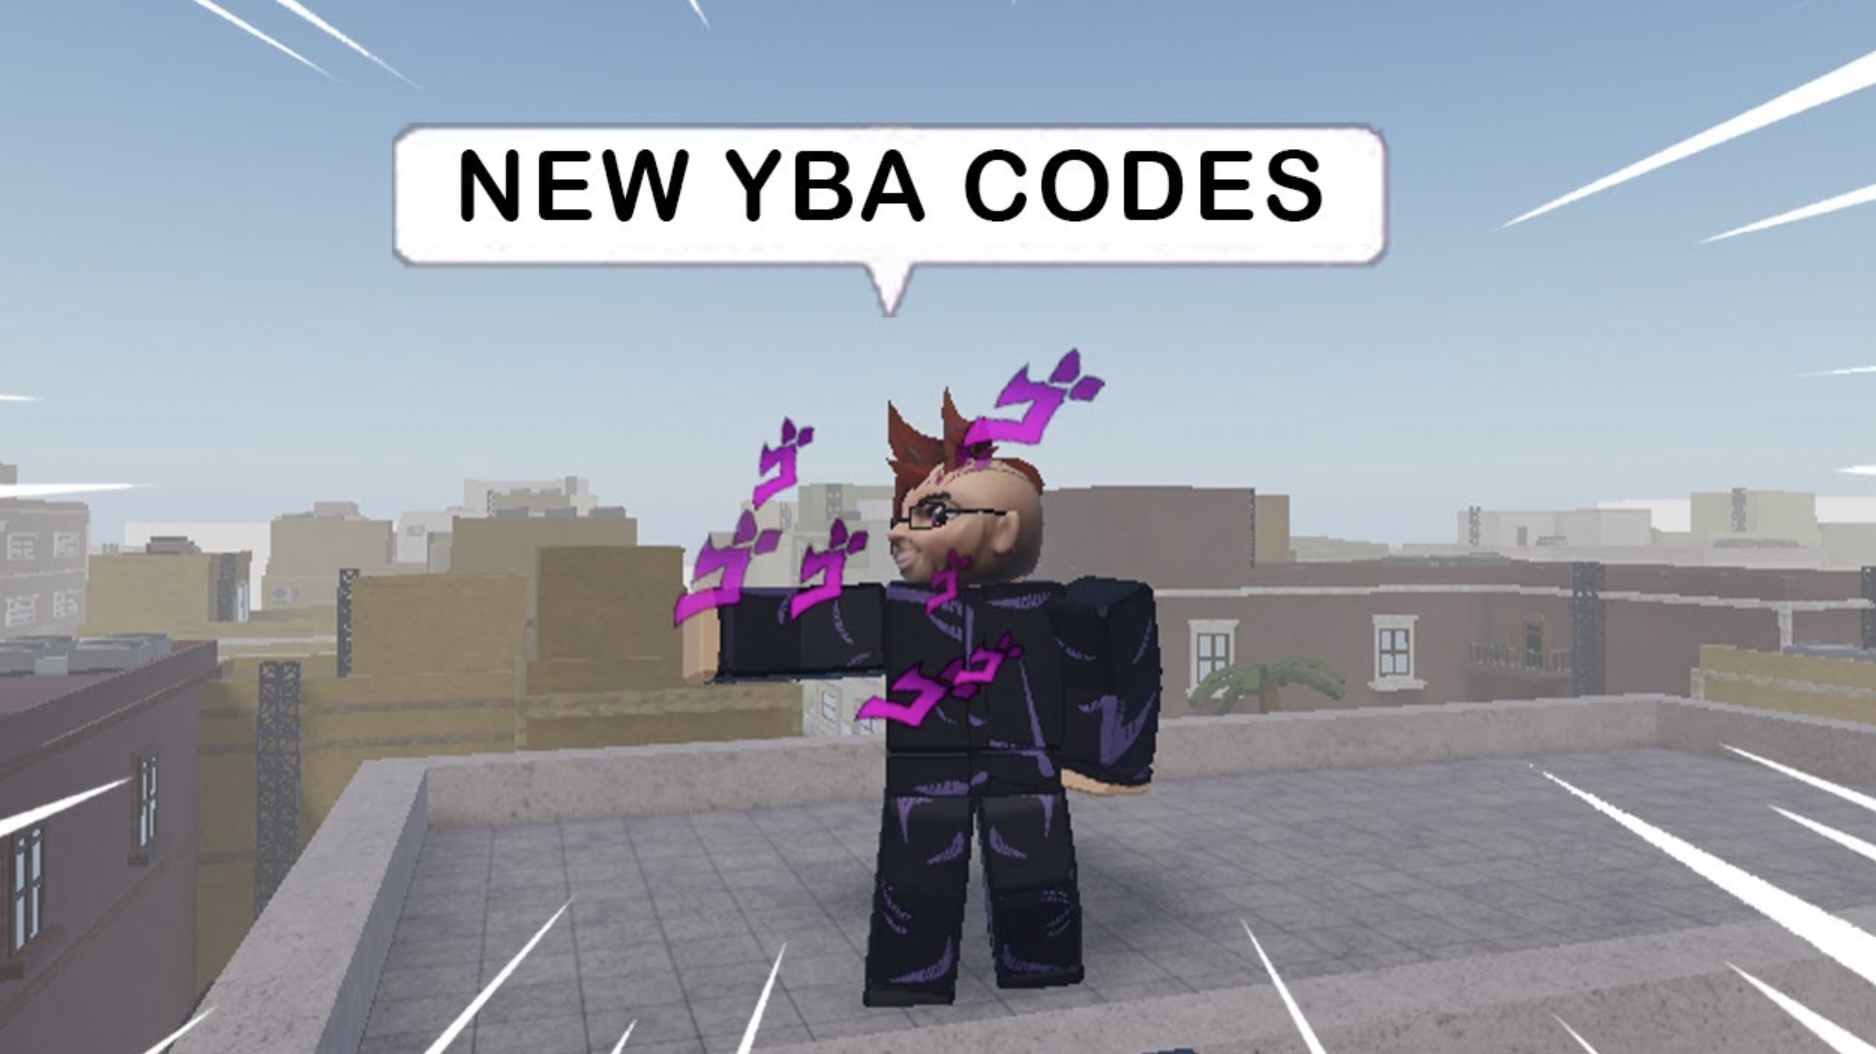 YBA Codes